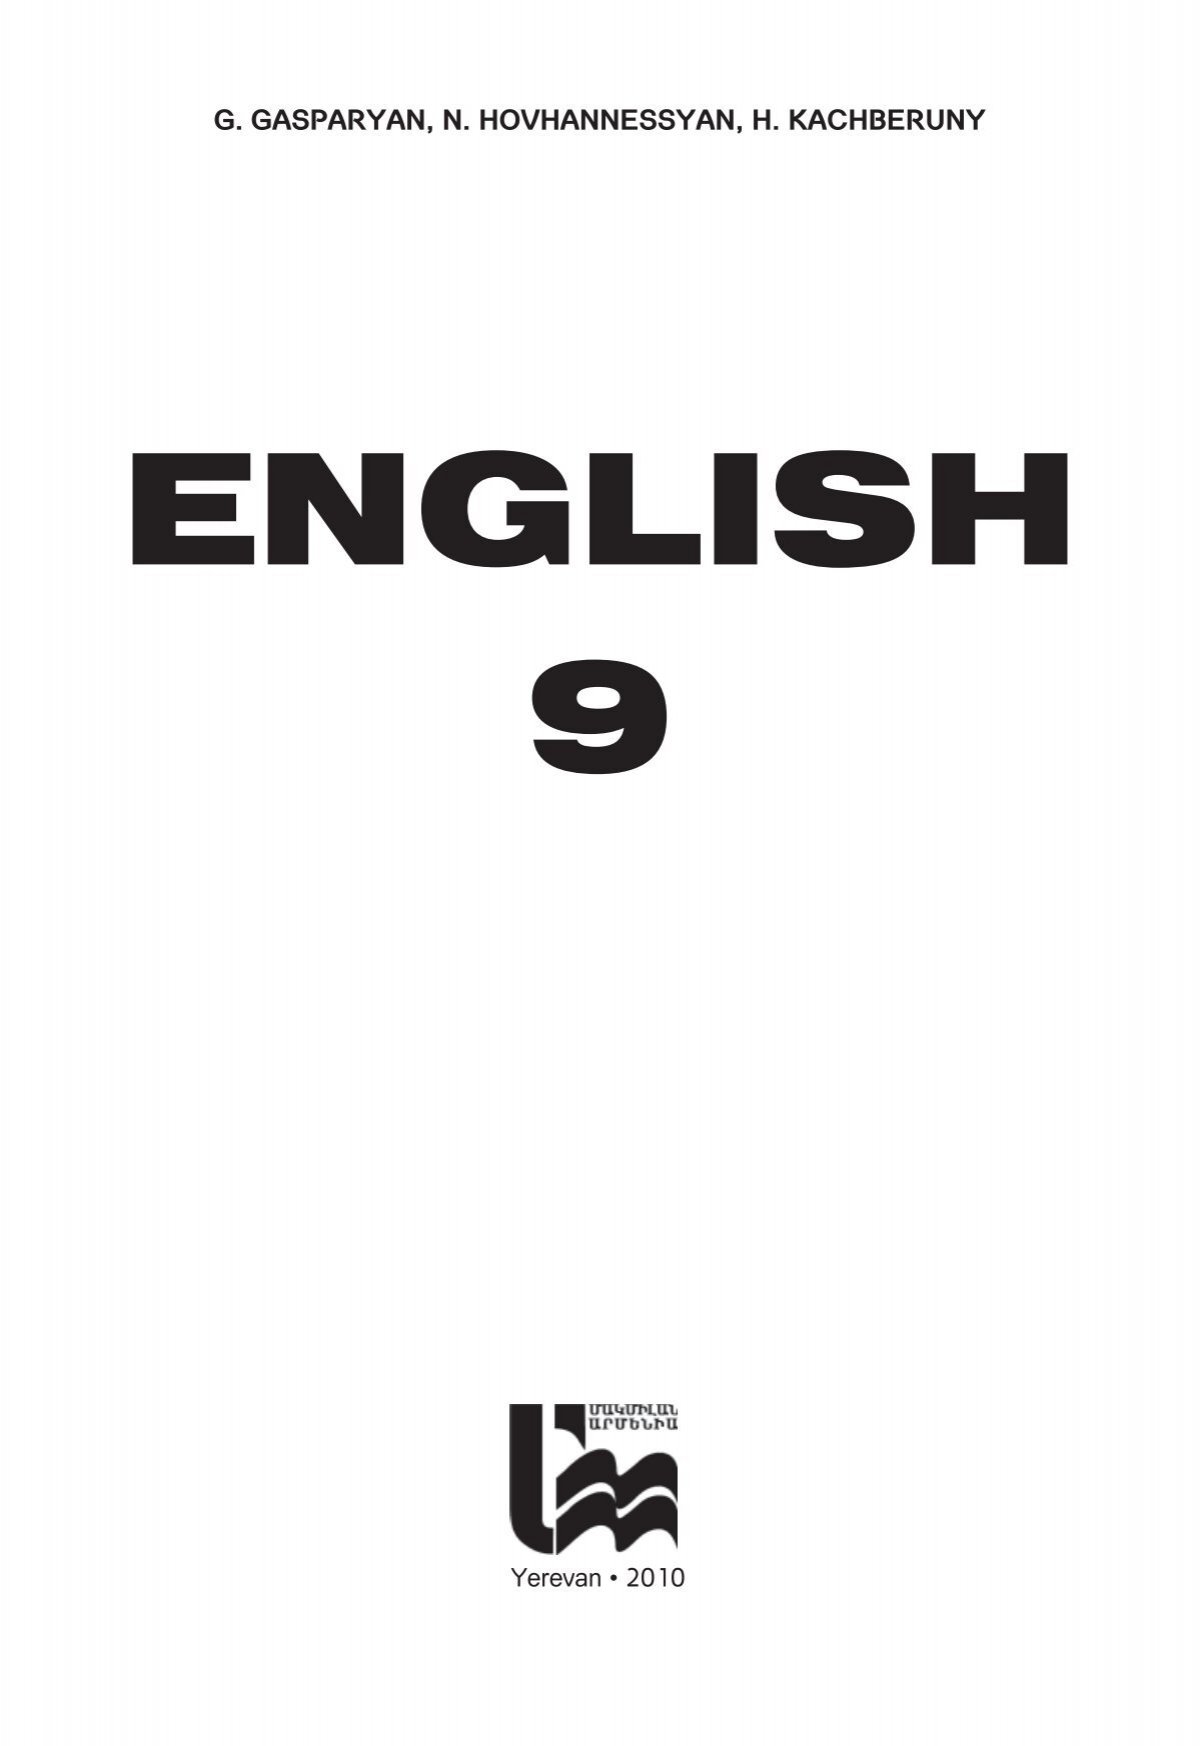 English 9